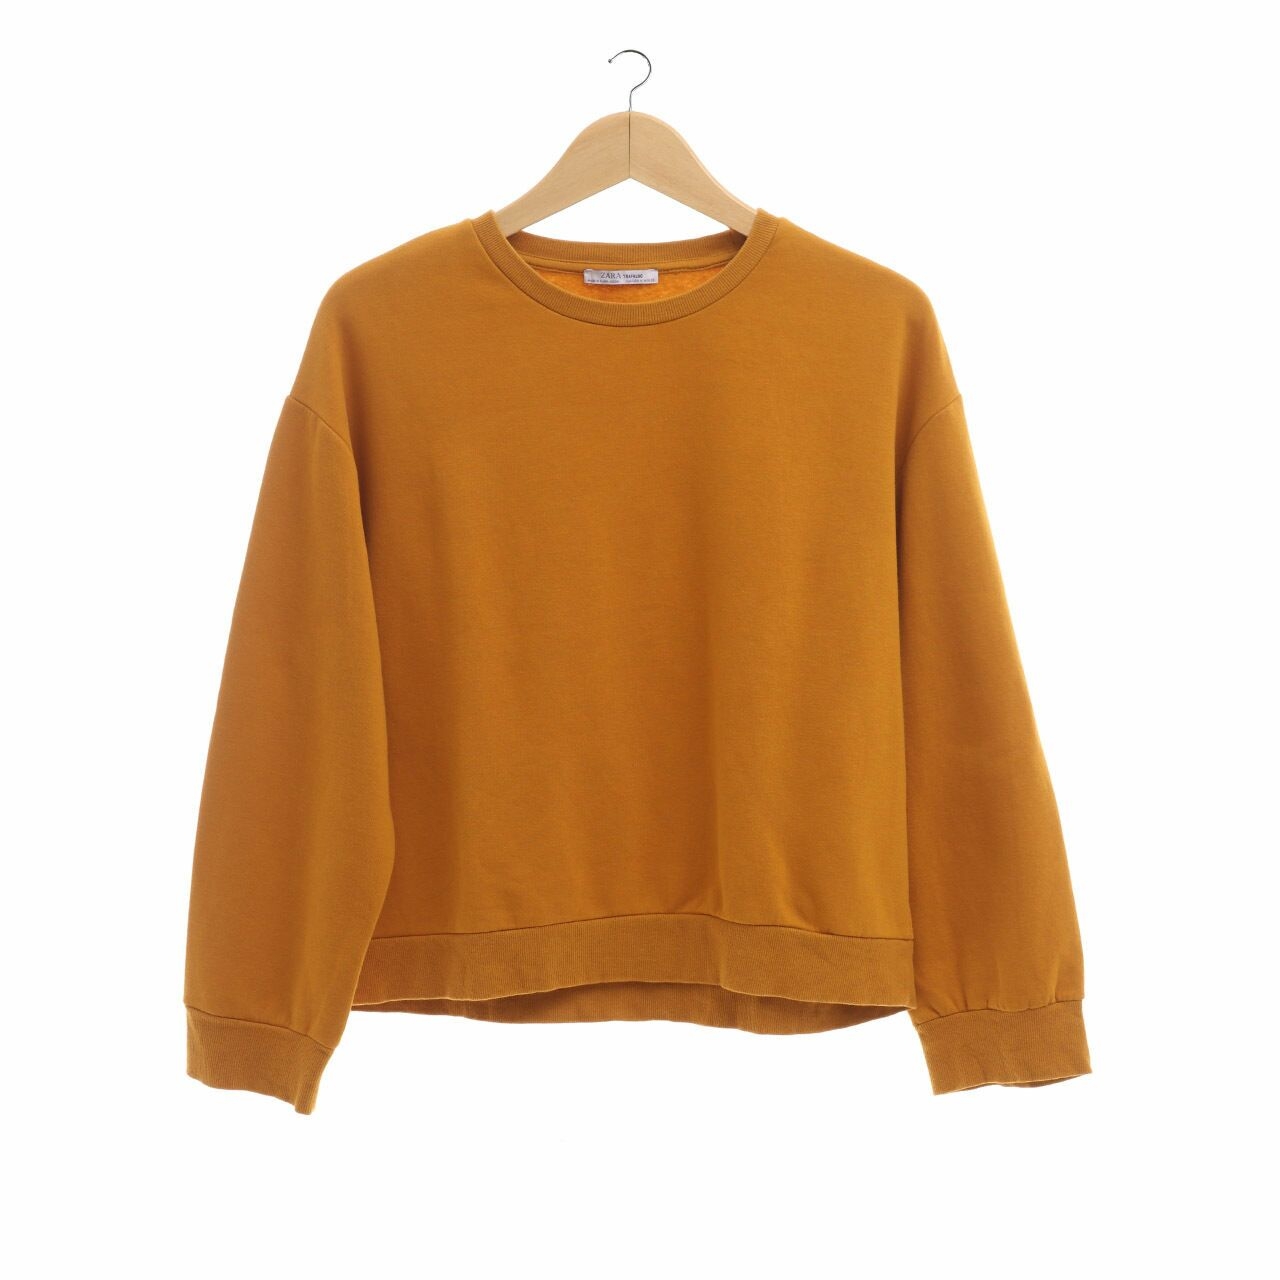 Zara Mustard Sweater